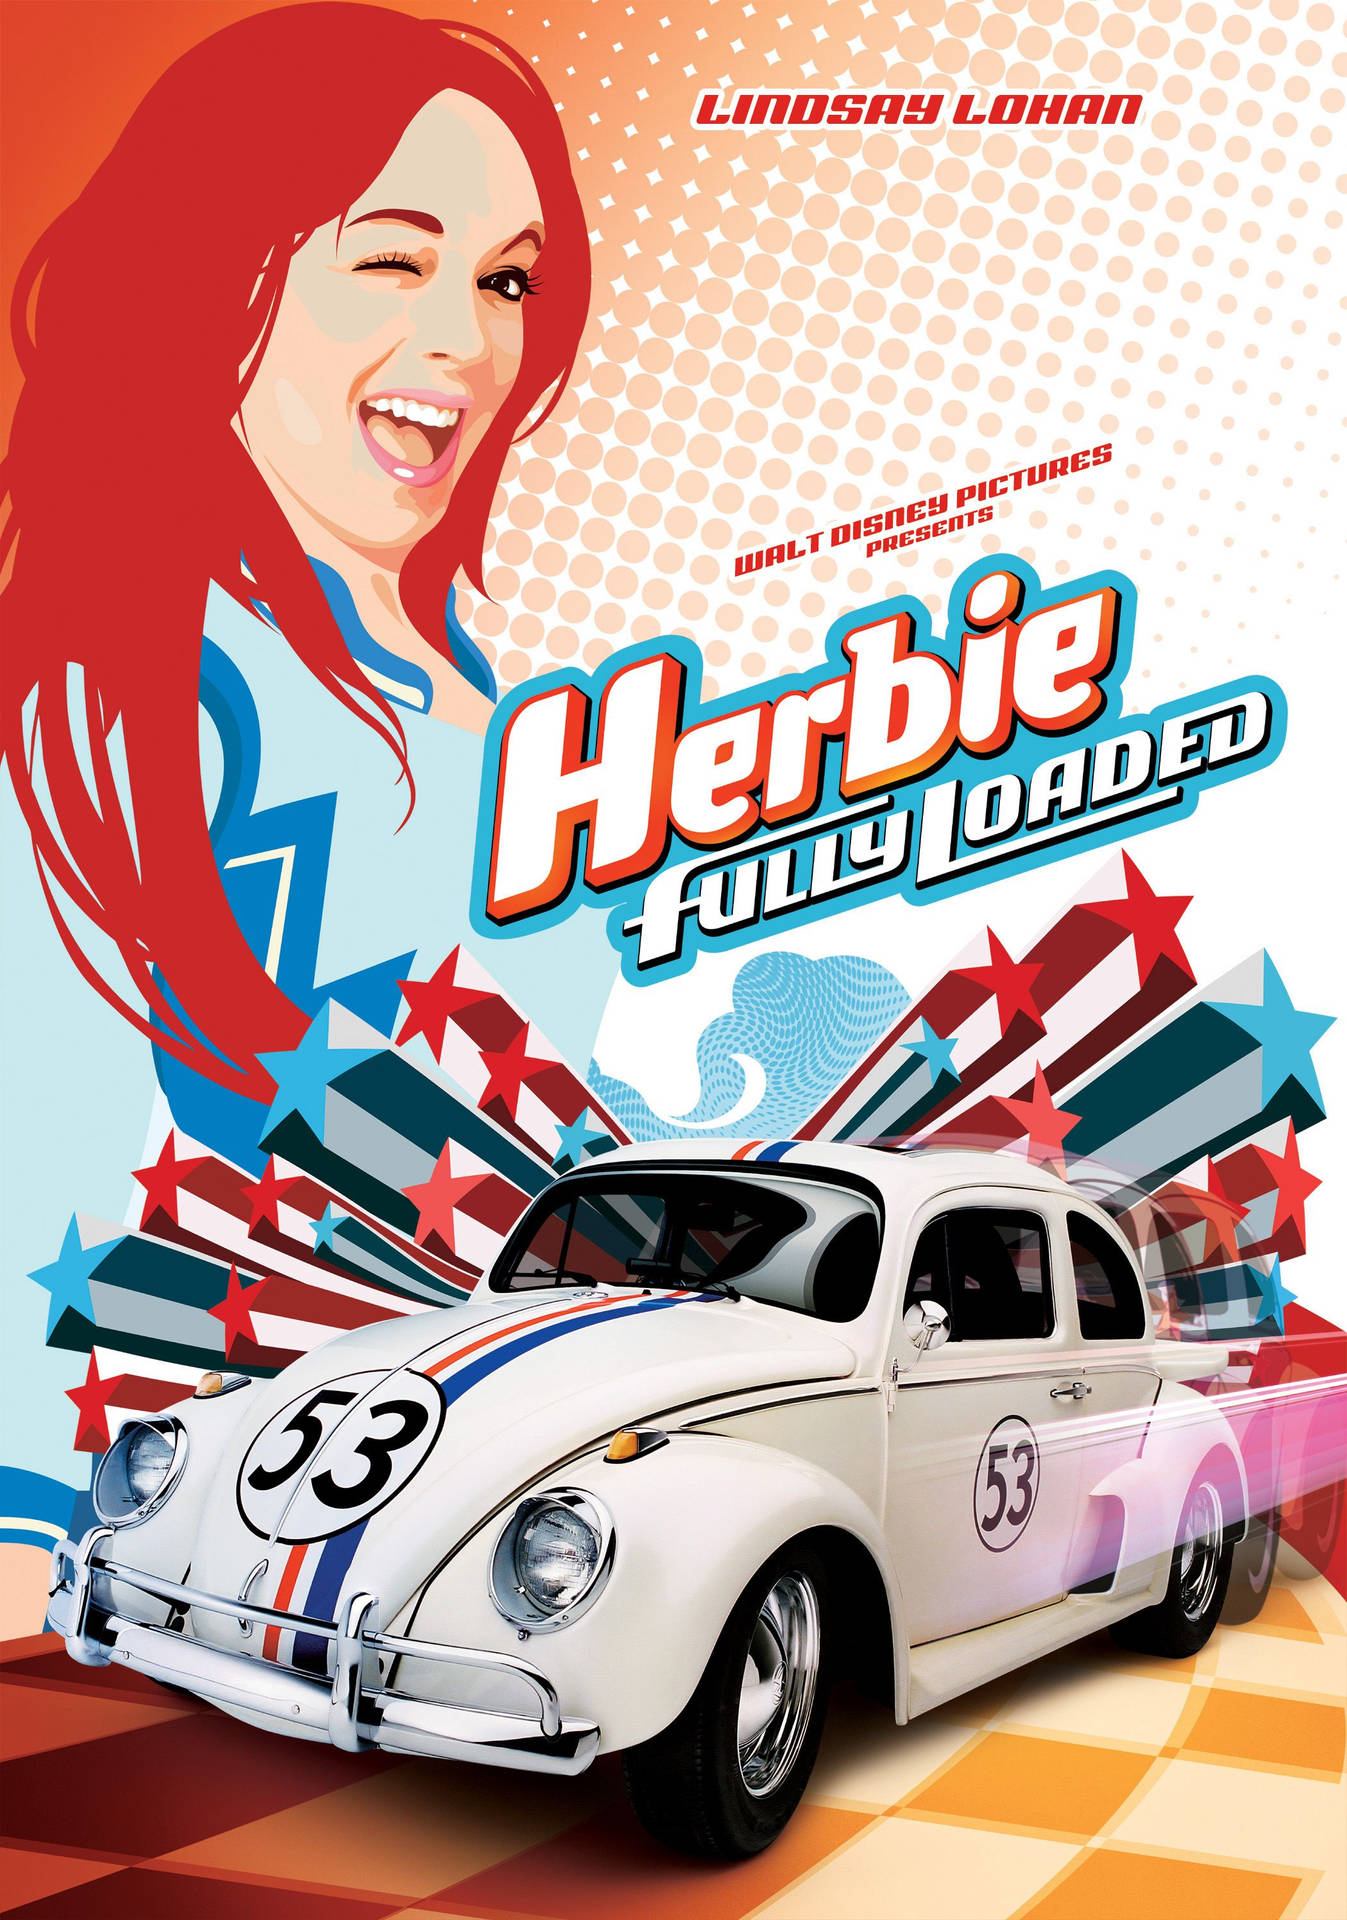 Herbievoll Abgedreht, Buntes Poster Mit Lindsay Lohan Wallpaper